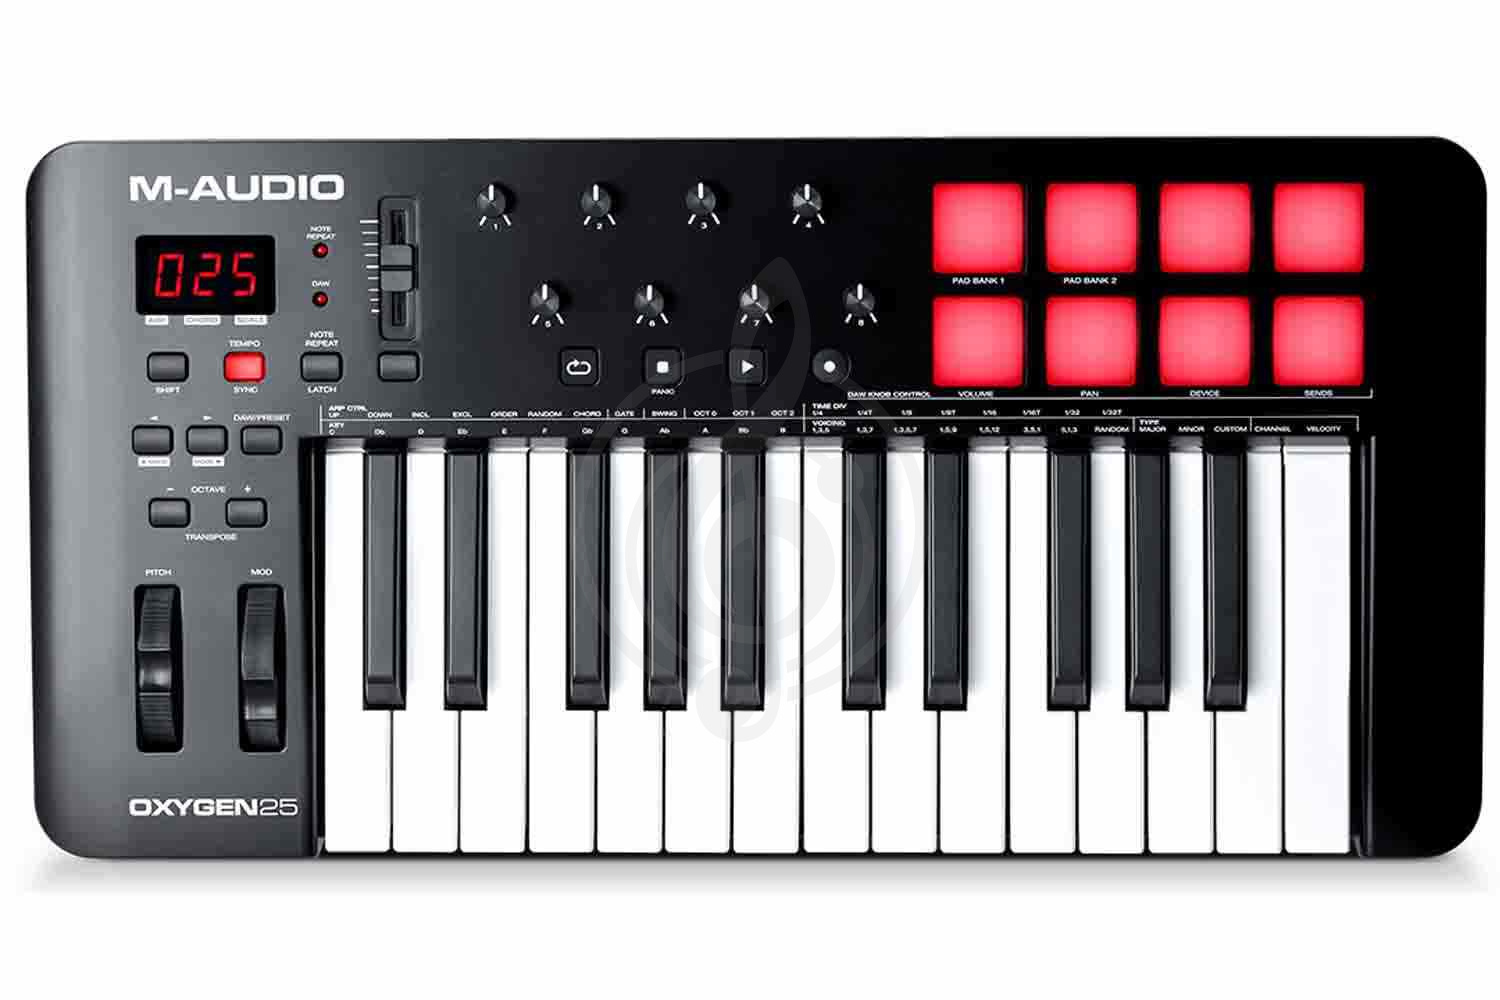 MIDI-контроллер Миди-клавиатуры M-Audio M-Audio Oxygen 25 Mk IV - USB миди-клавиатура Oxygen 25 Mk IV - фото 1